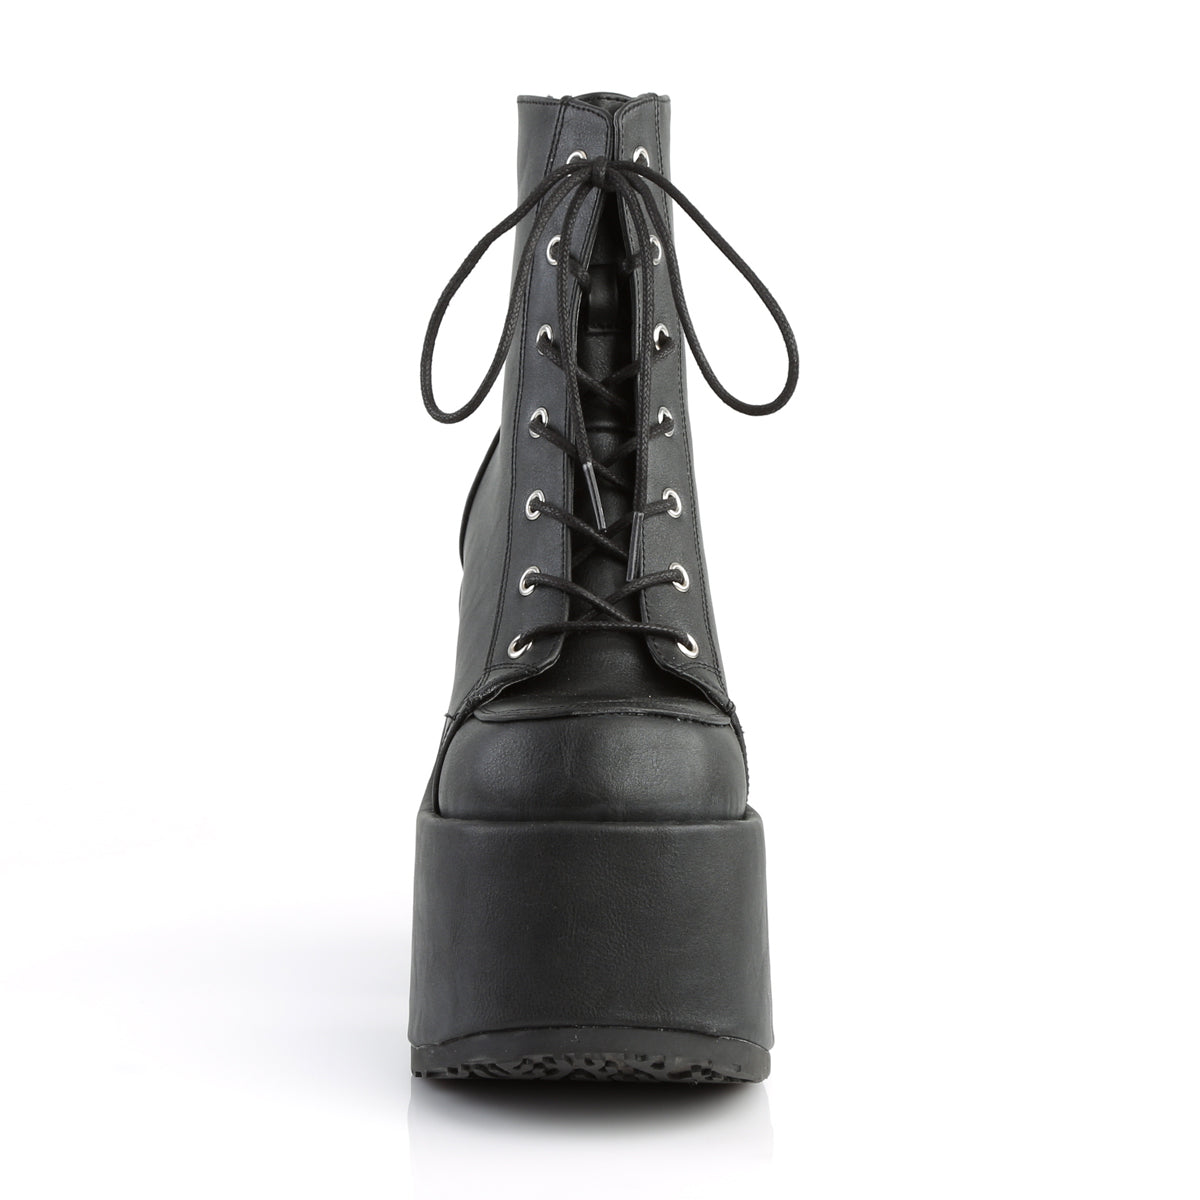 Demonia Platform Boots - Camel203 Black